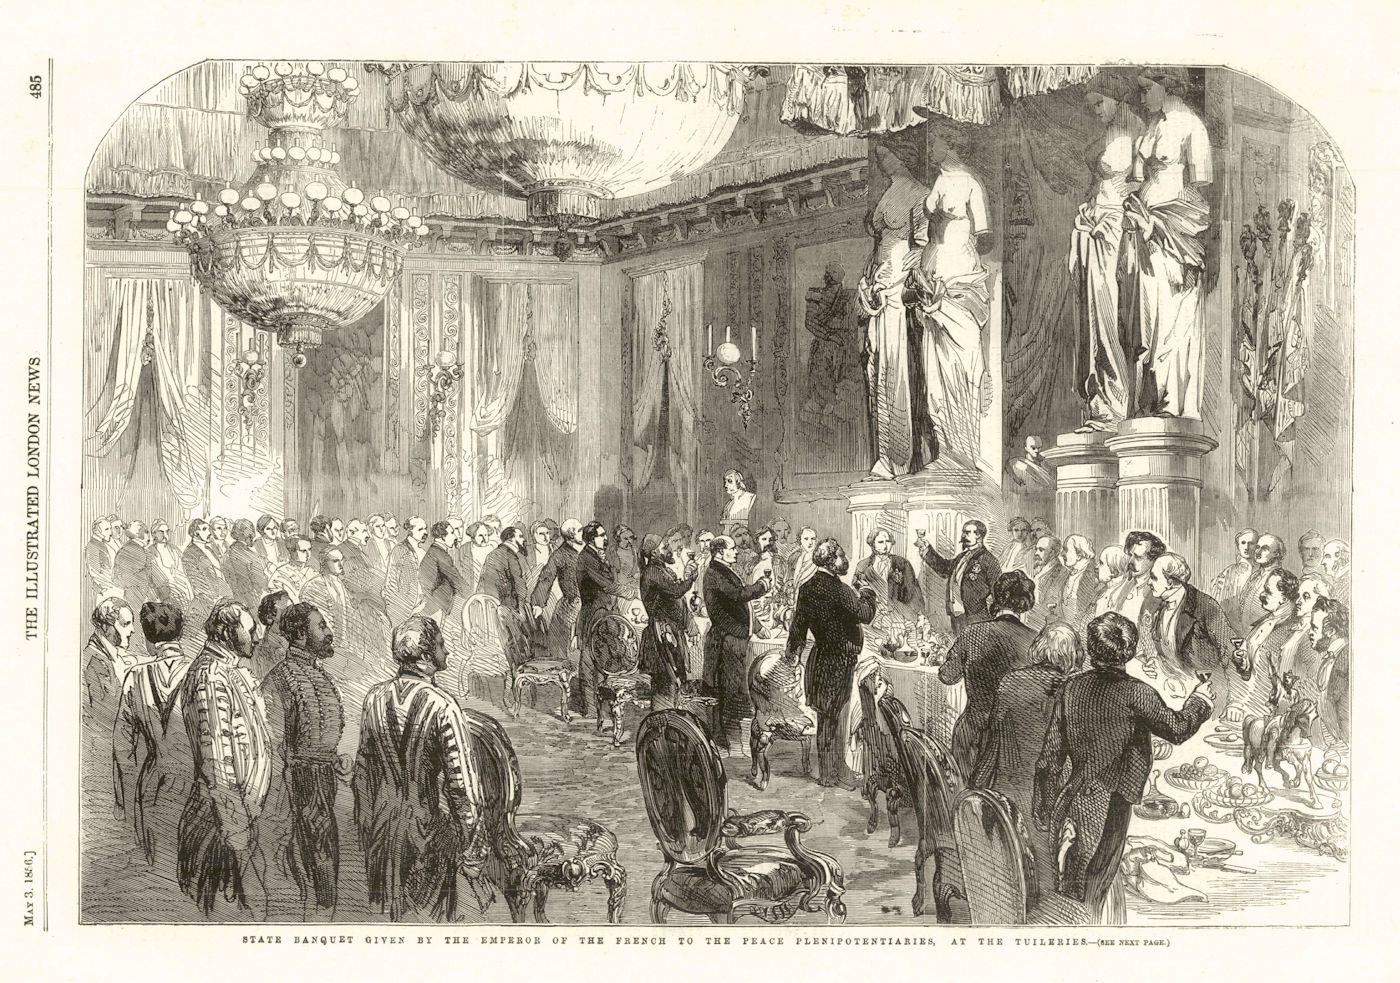 Banquet French Emperor Peace Plenipotentiaries Tuileries. Paris 1856 ILN print